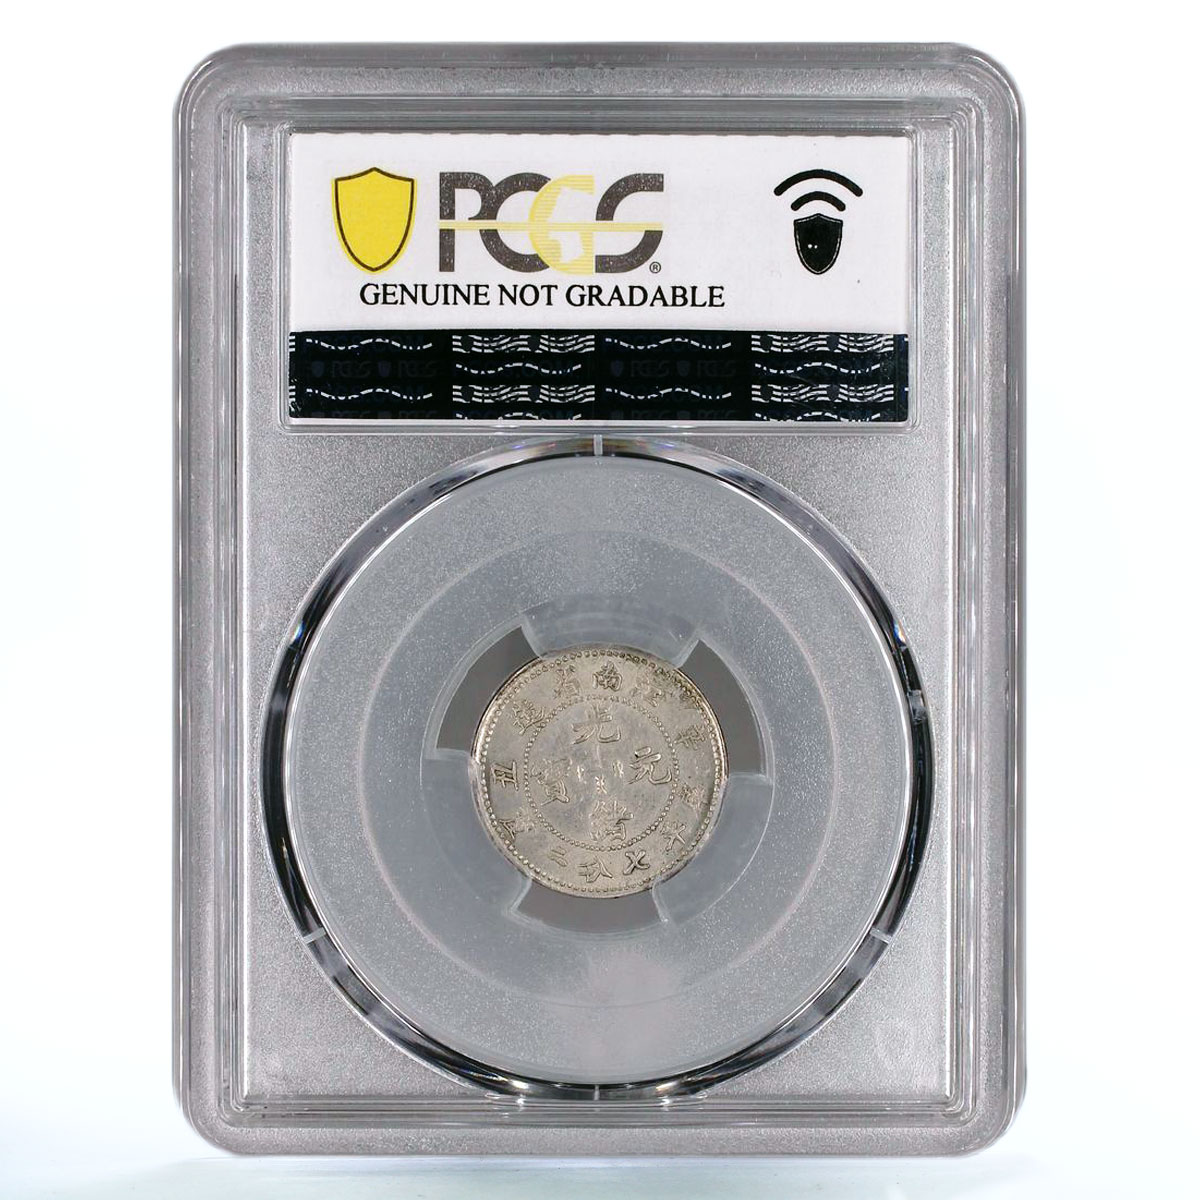 China Kiangnan 10 cents Guangxu Uncircled Dragon LM239 Genuine PCGS Ag coin 1901